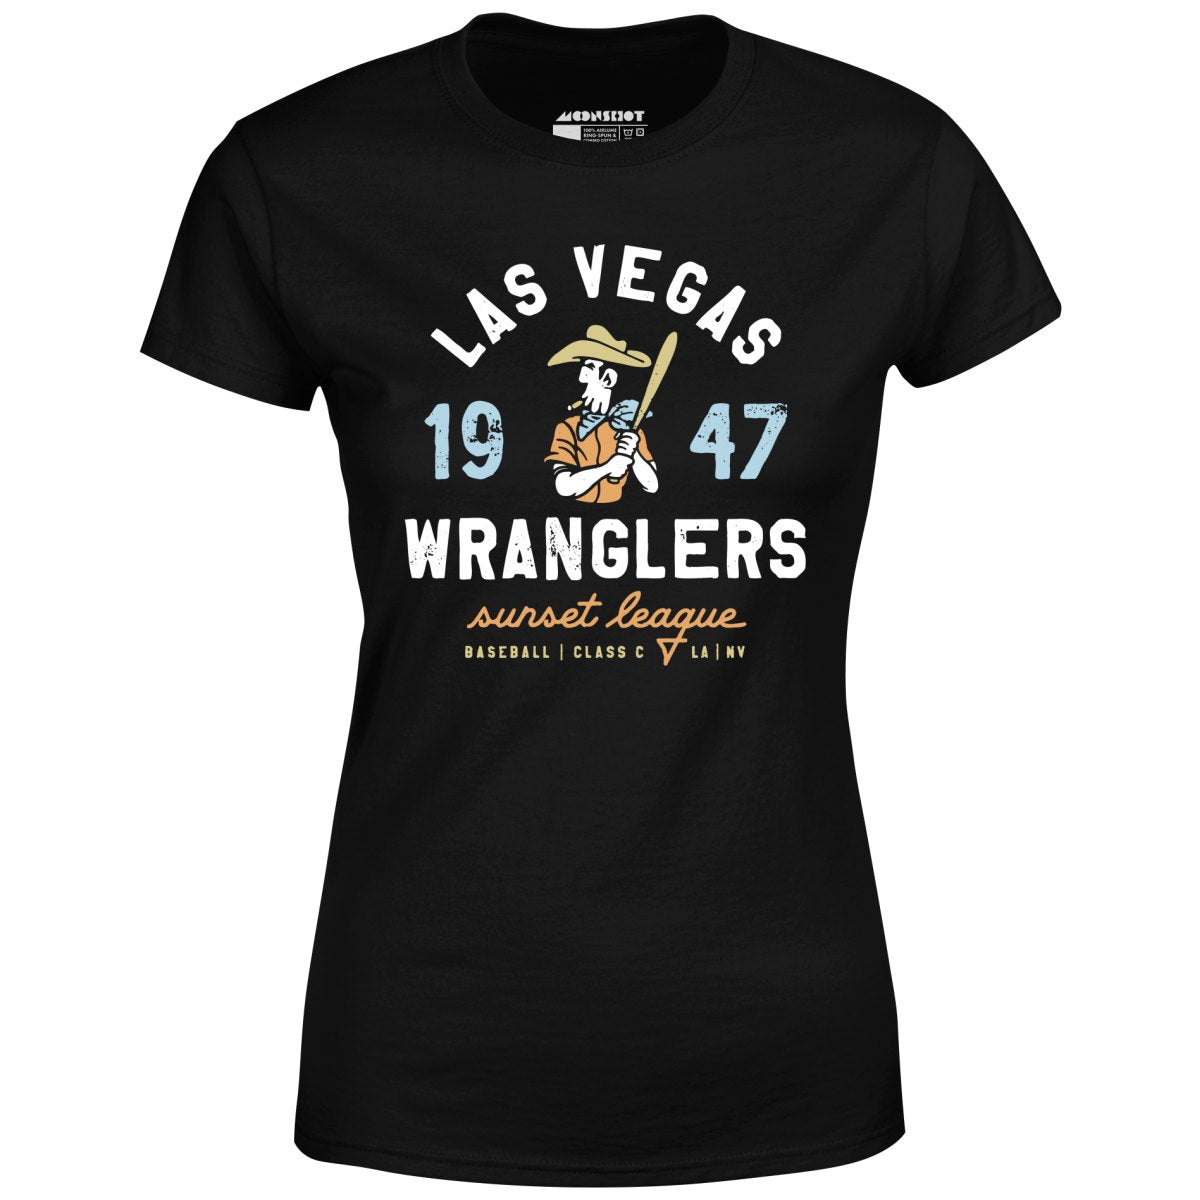 Las Vegas Wranglers - Nevada - Vintage Defunct Baseball Teams - Women's T-Shirt